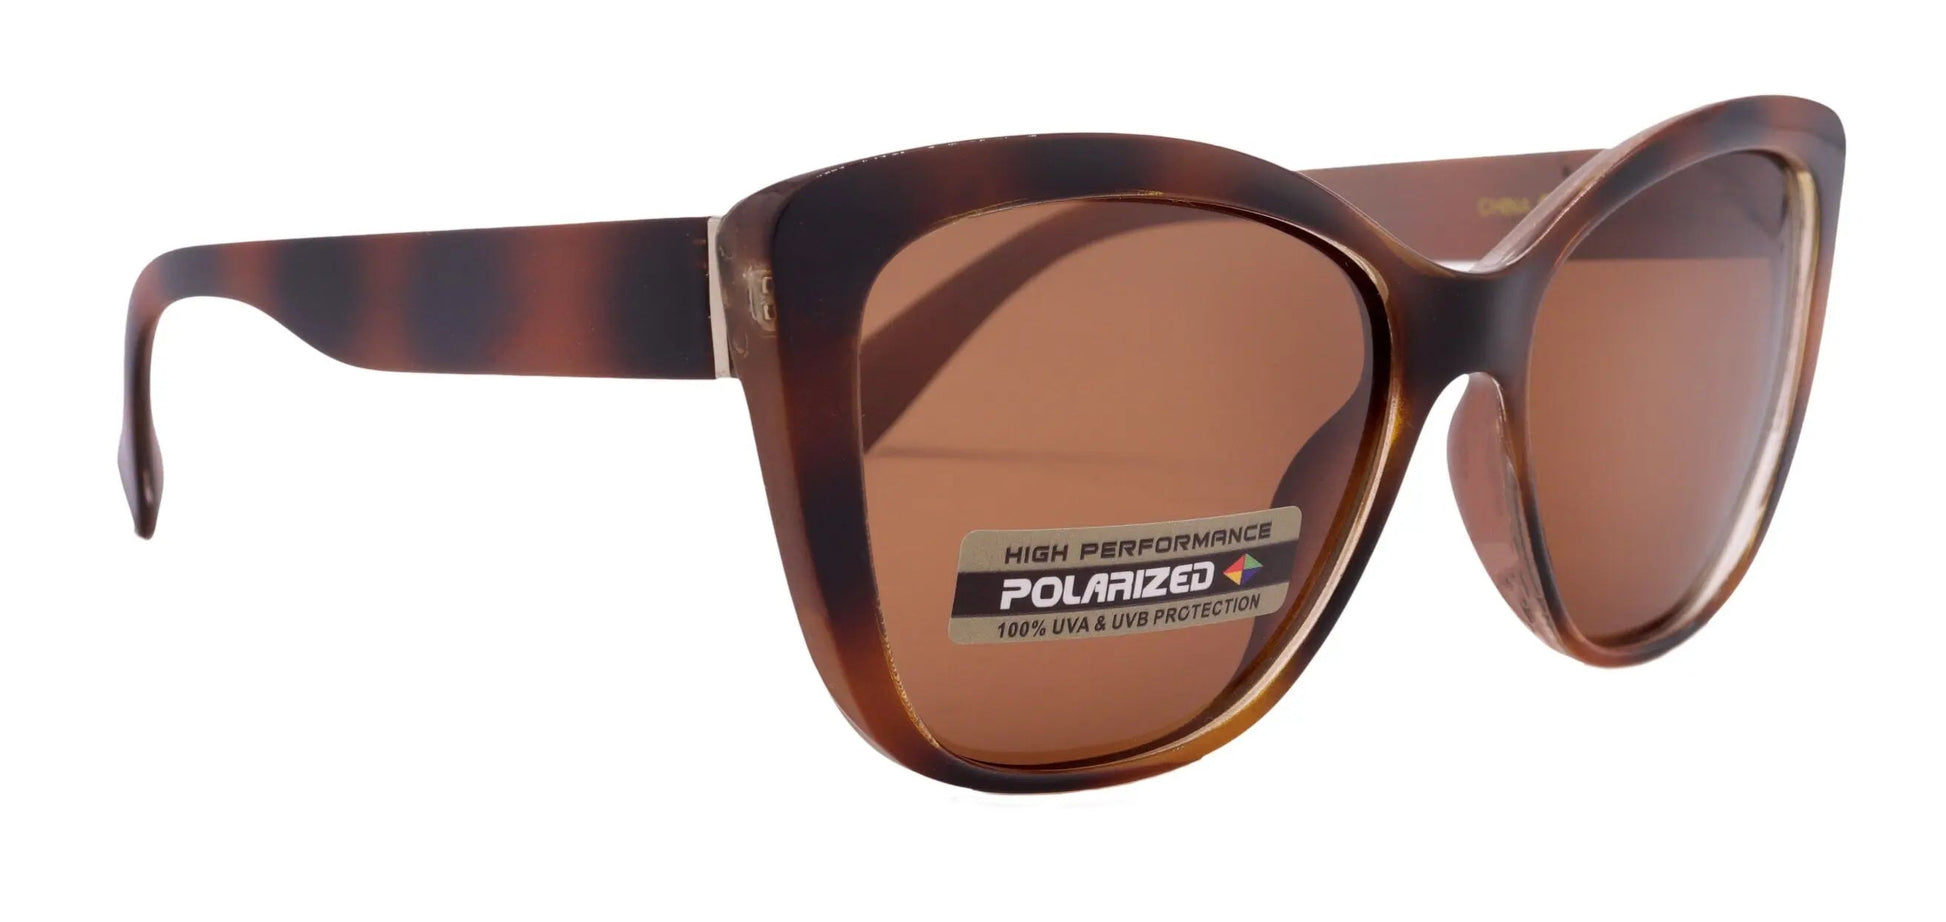 Avery, (Polarized) Women Sunglasses, 1.1mm Polarized Amber Lenses, 100% UVA  UVB Protection (Stripes, Brown) (Cat Eye) Trendy